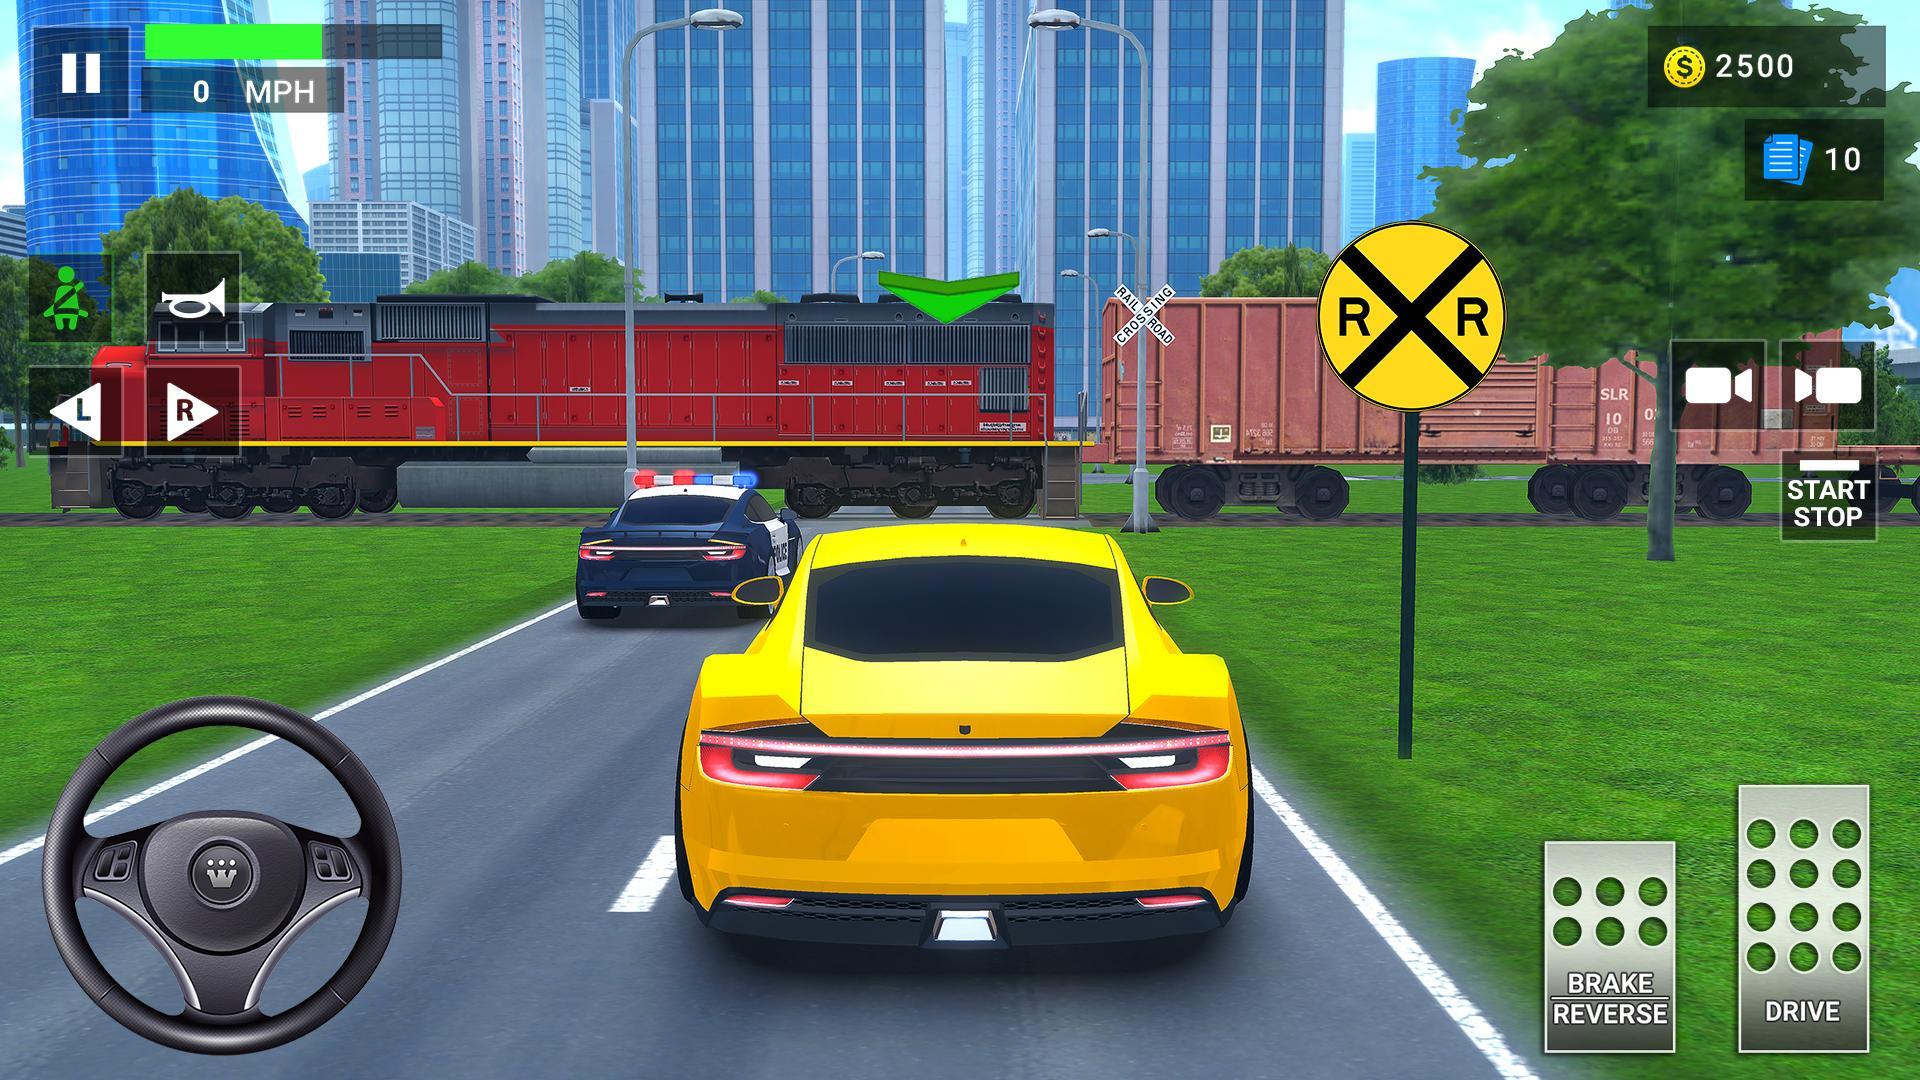 Driving Academy 2 Car Games & Driving School 2021 2.1 Screenshot 1